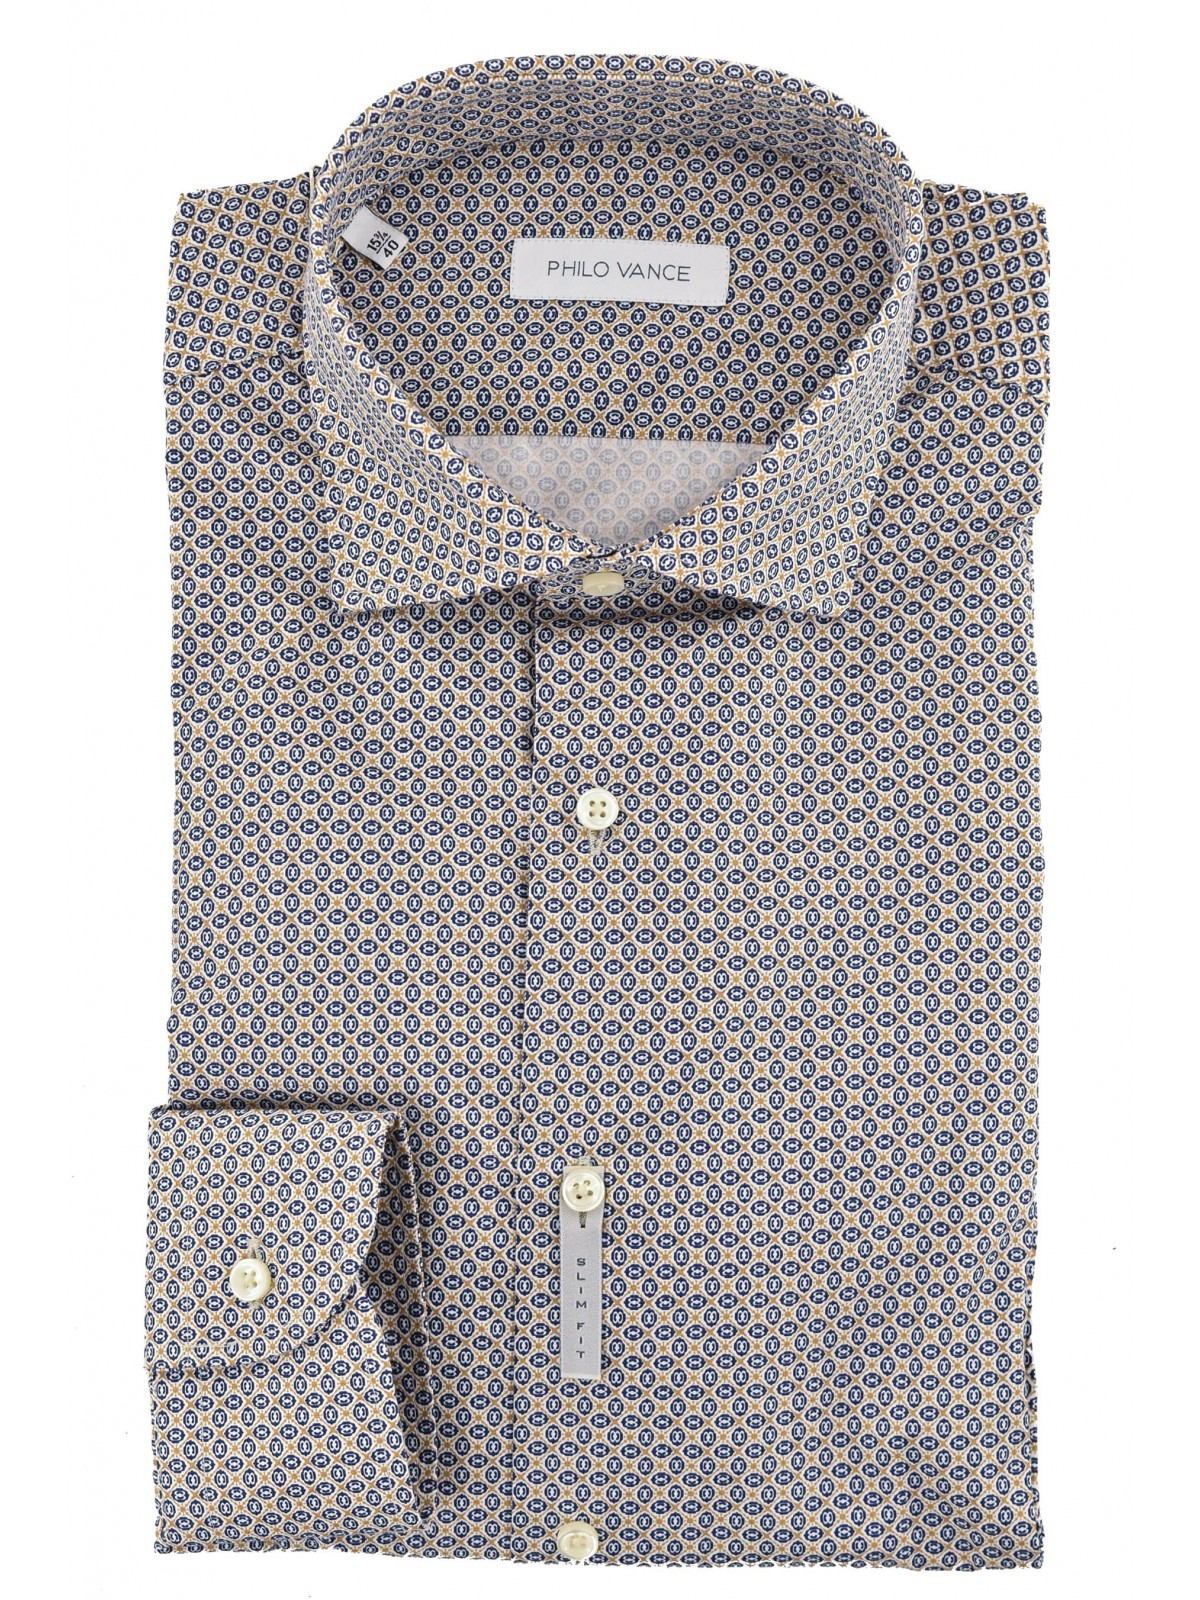 Slimfit Men's Shirt French Collar Geometric Pattern Blue Beige White - Montese